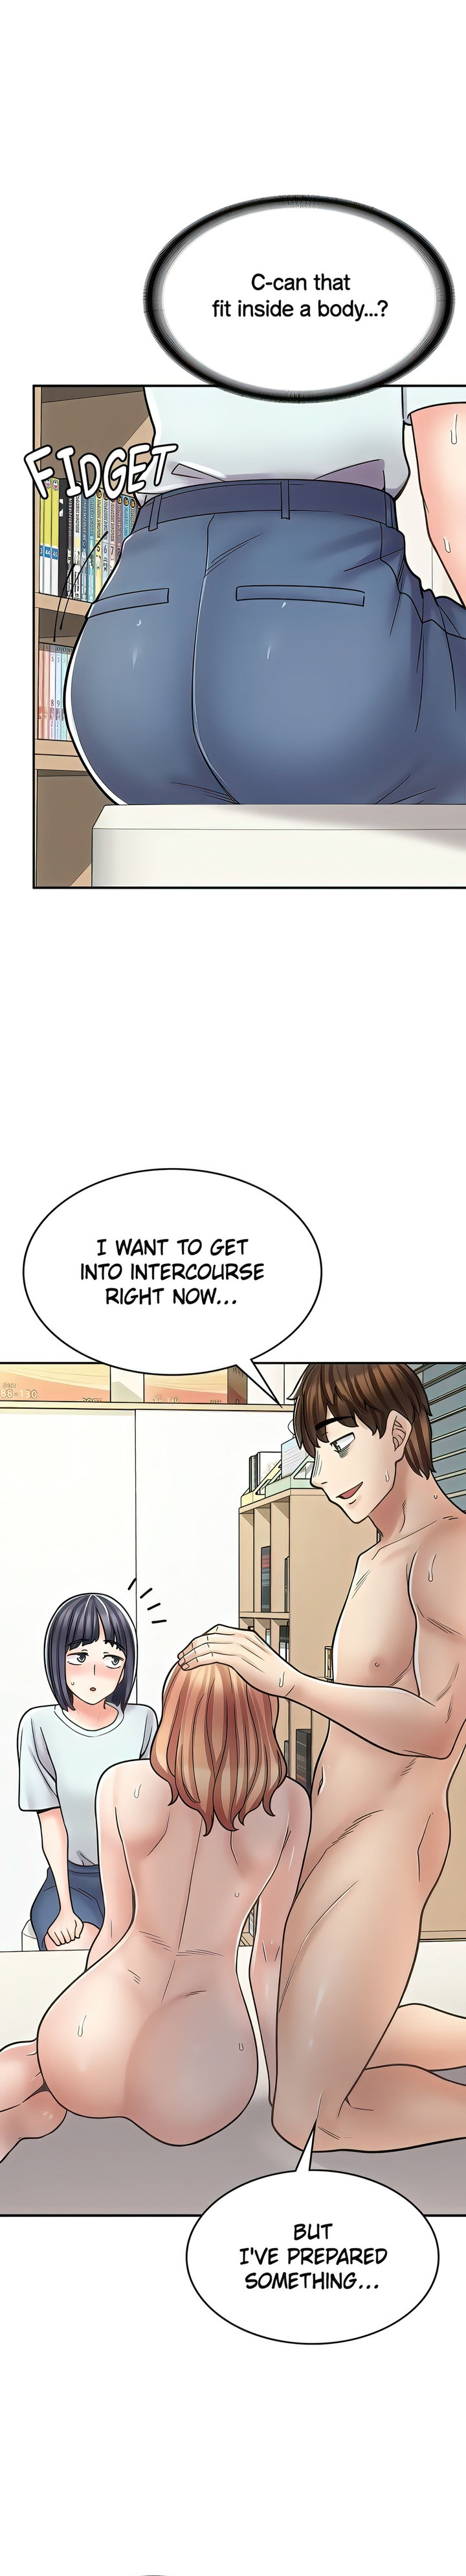 Erotic Manga Café Girls - Chapter 31 Page 1